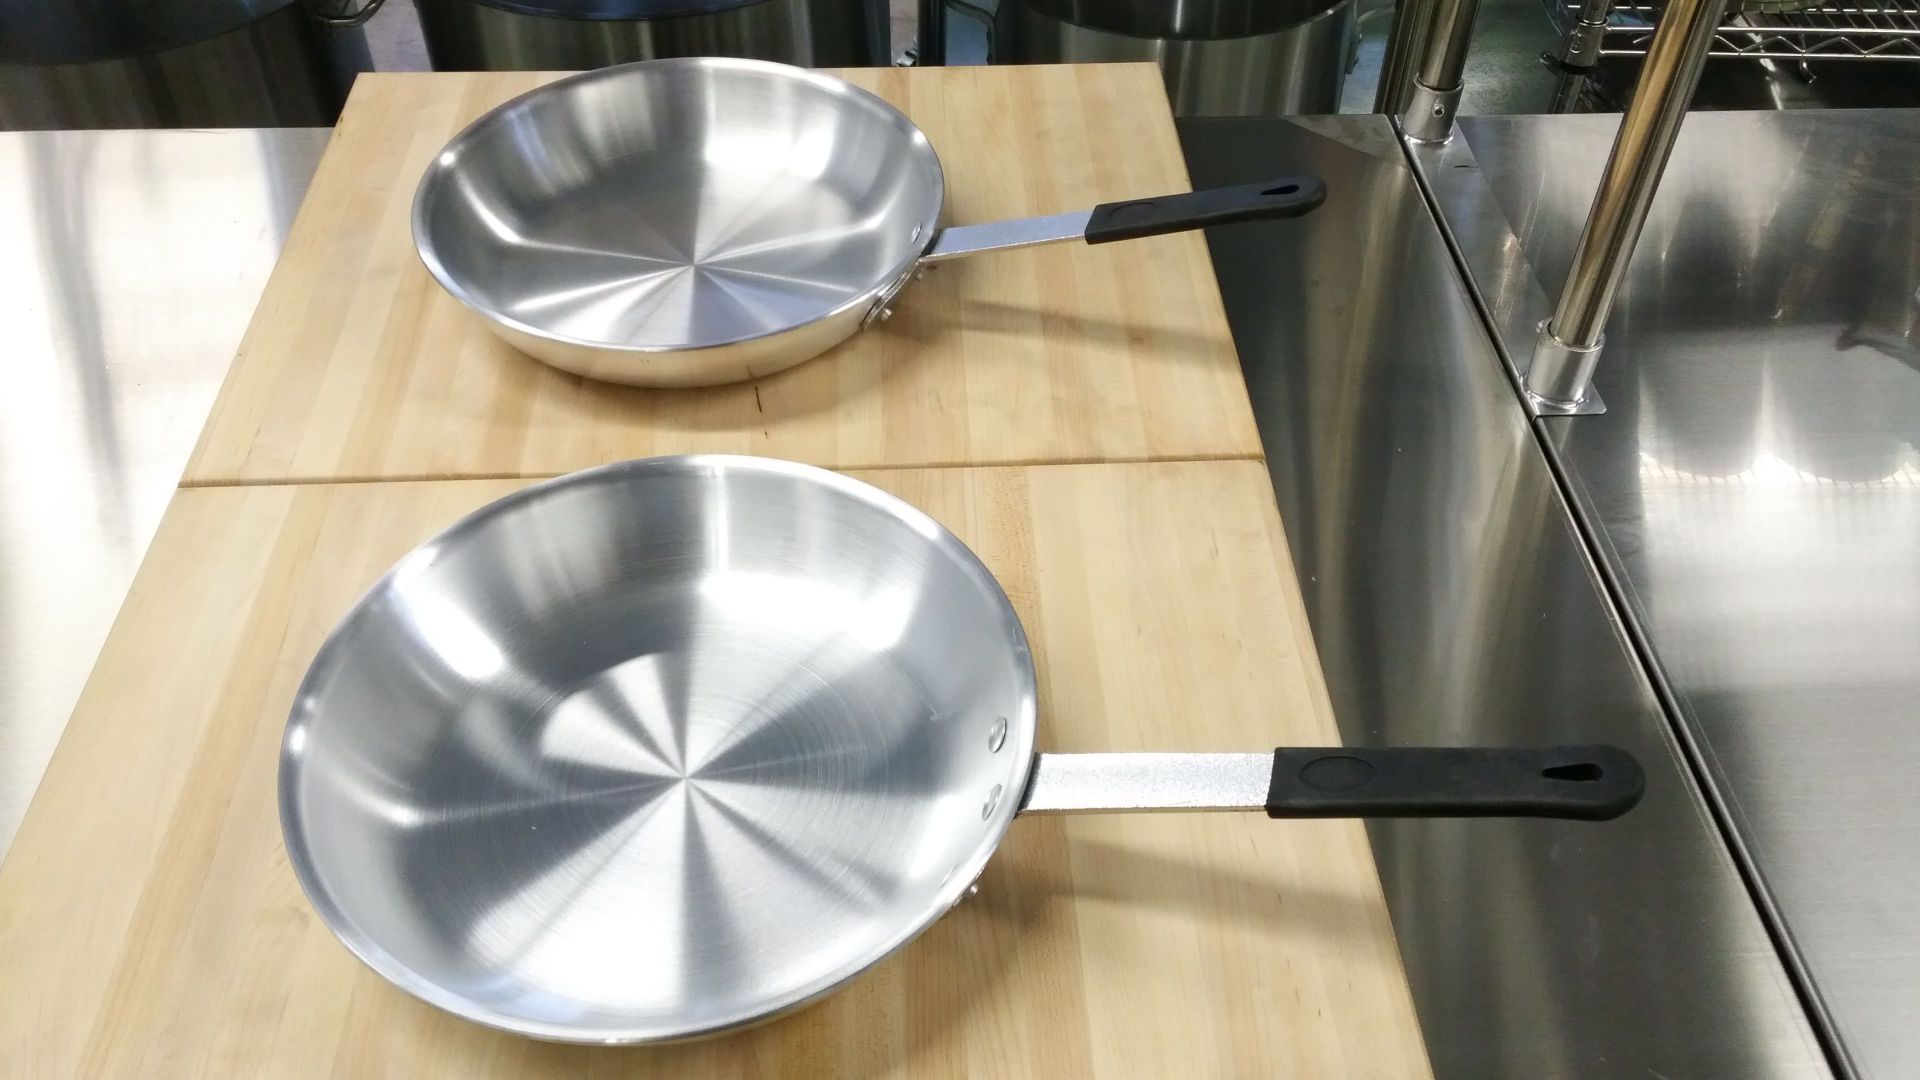 10" Aluminum Fry Pans, Johnson-Rose 63230 - Lot of 2